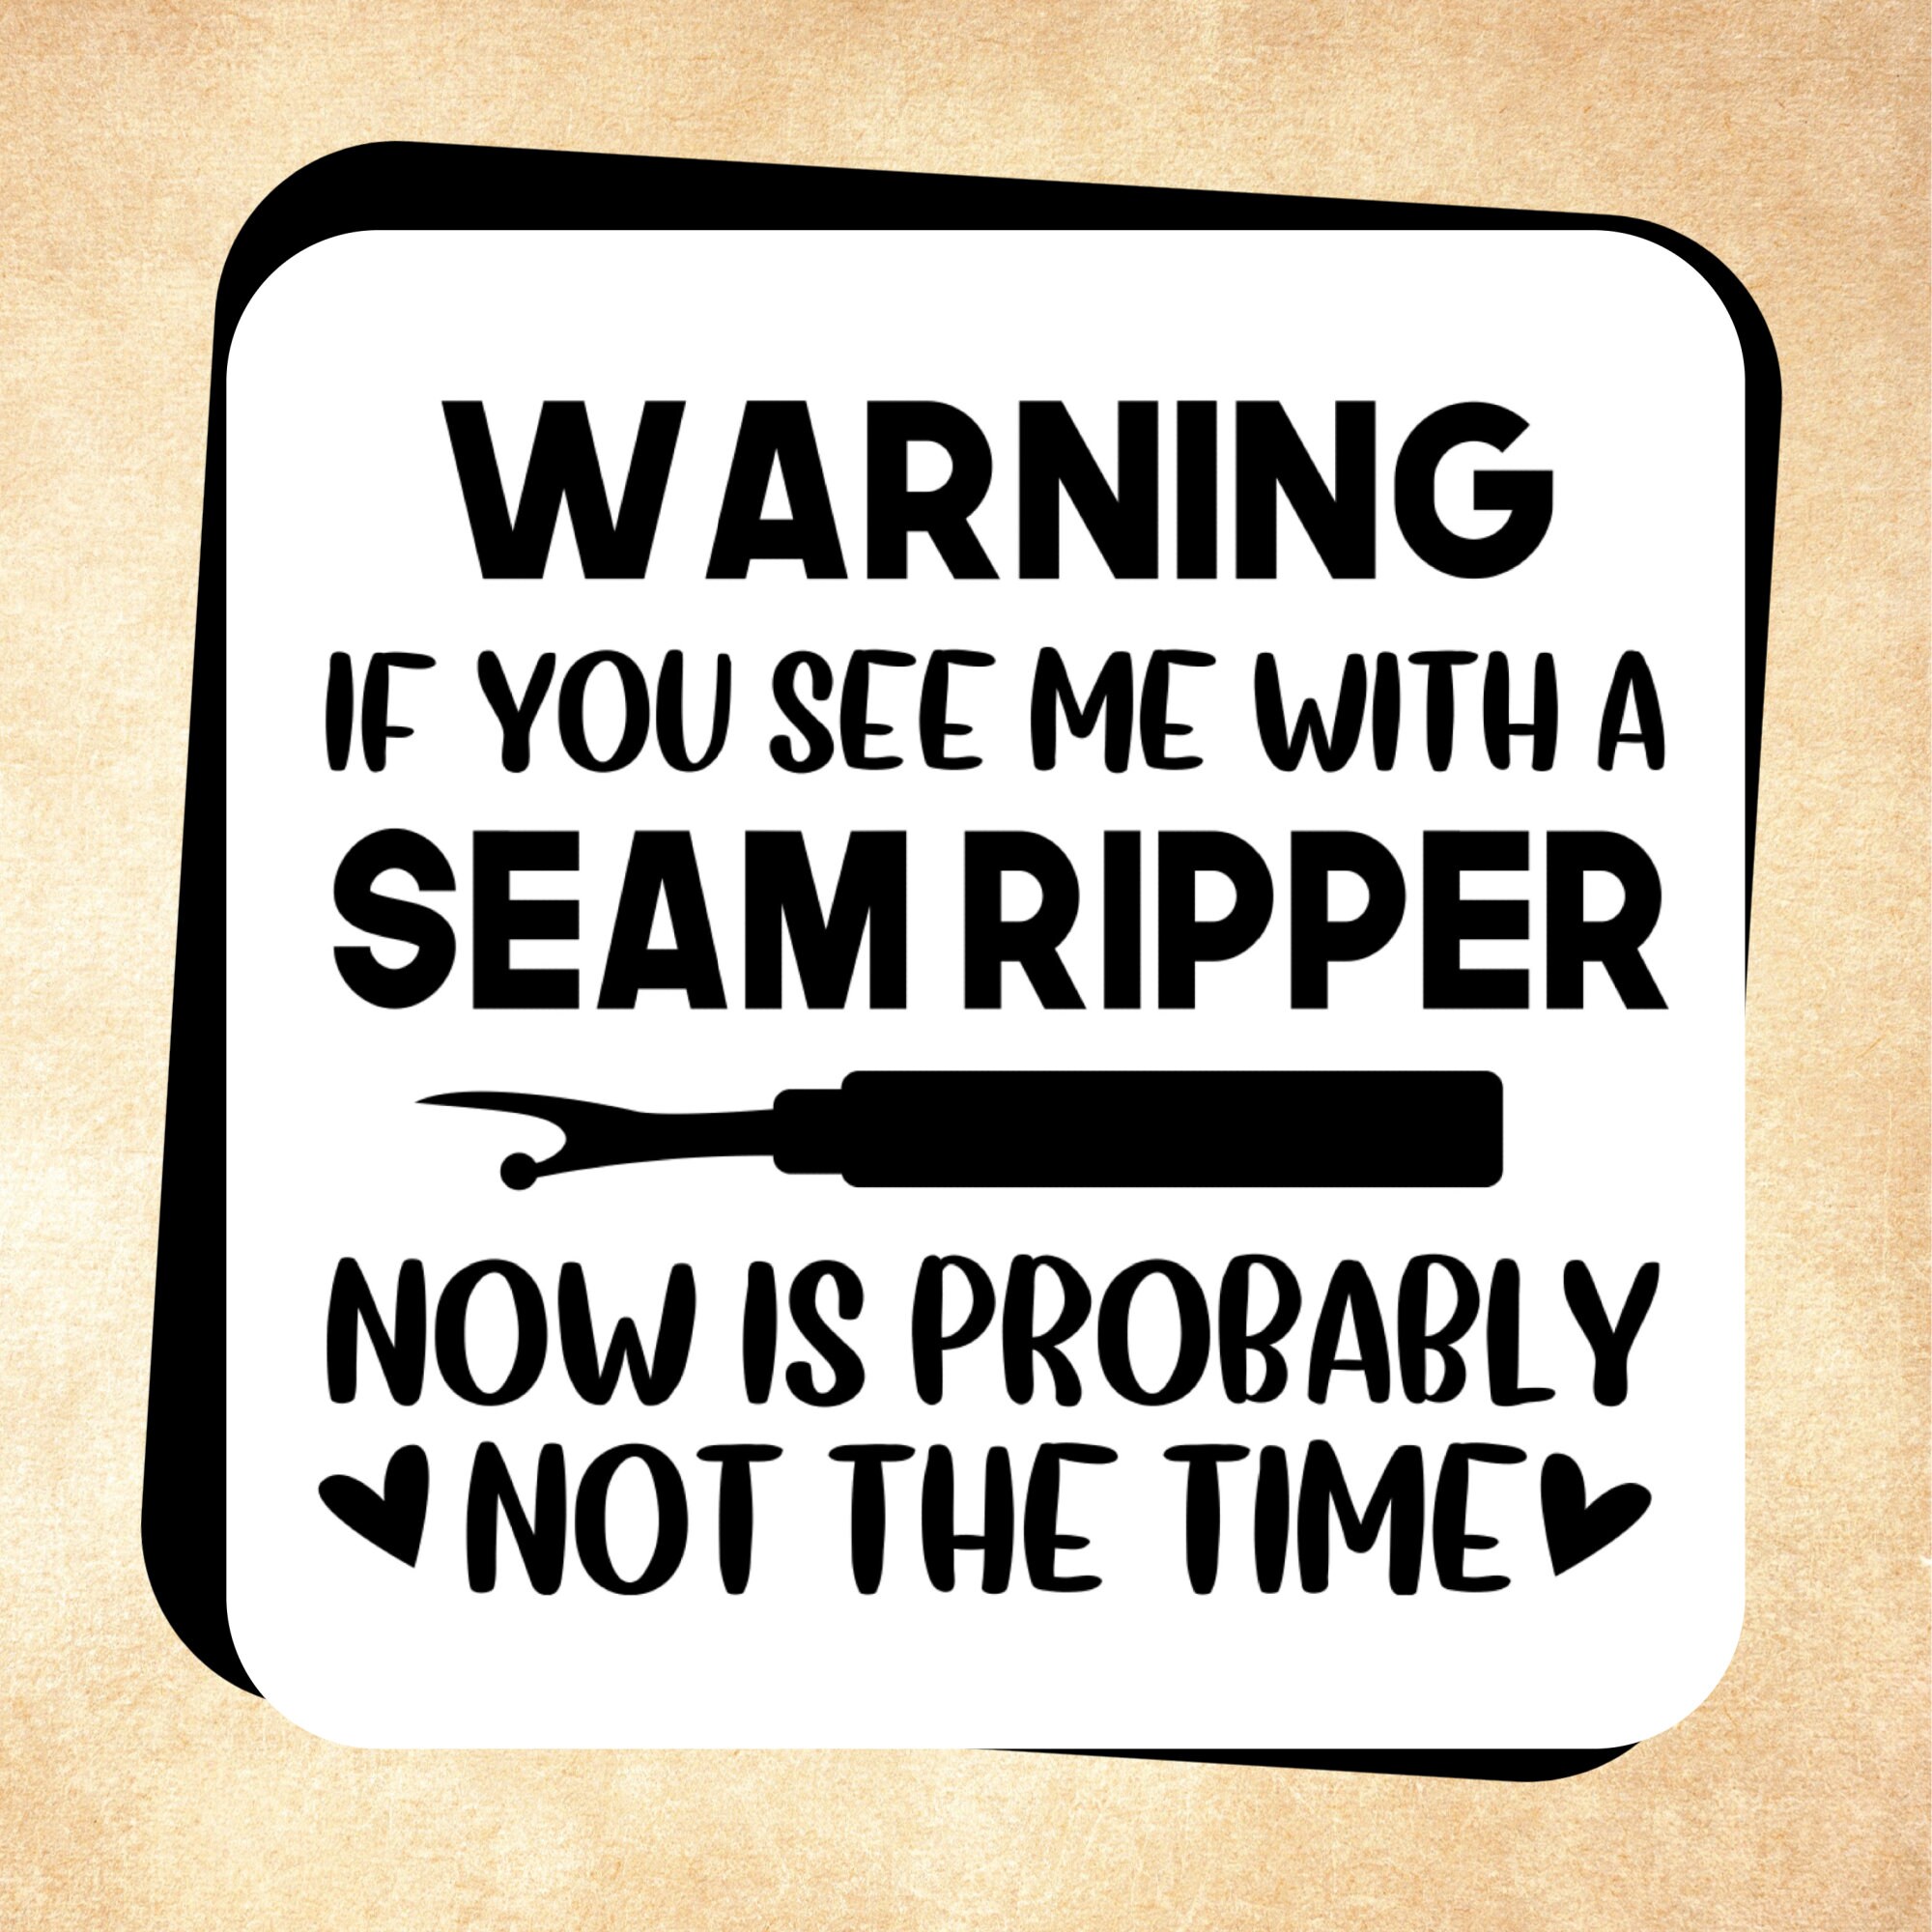 Embellish Seam Ripper - Sew-ciety